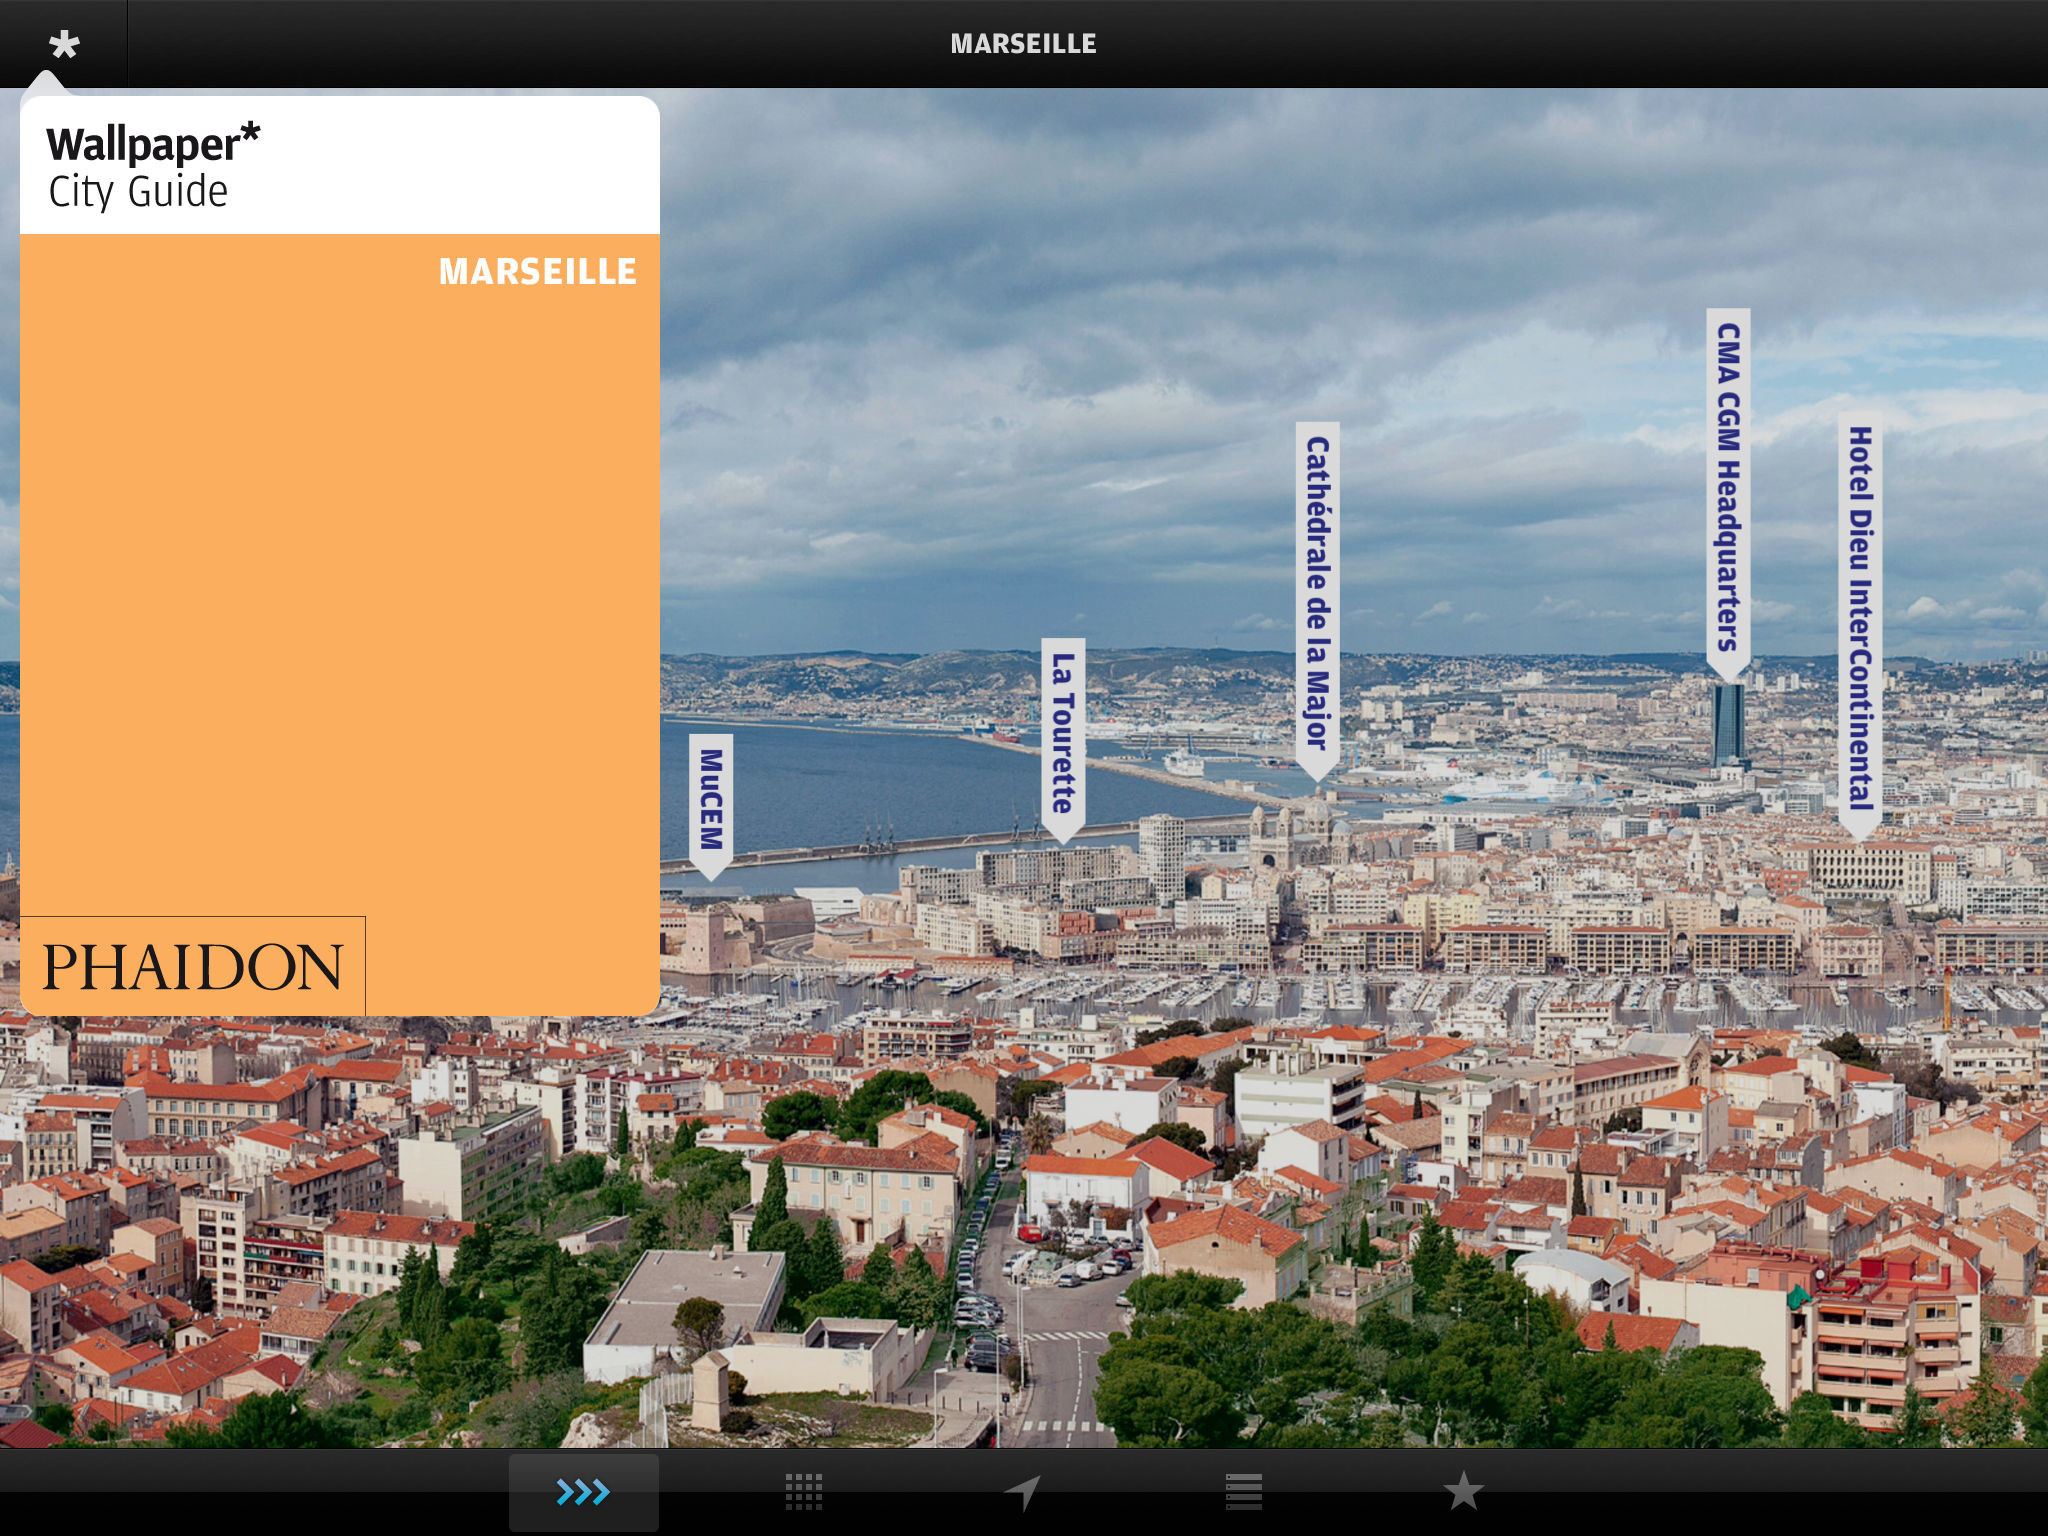 2048x1536 App Description. Wallpaper* City Guide ...